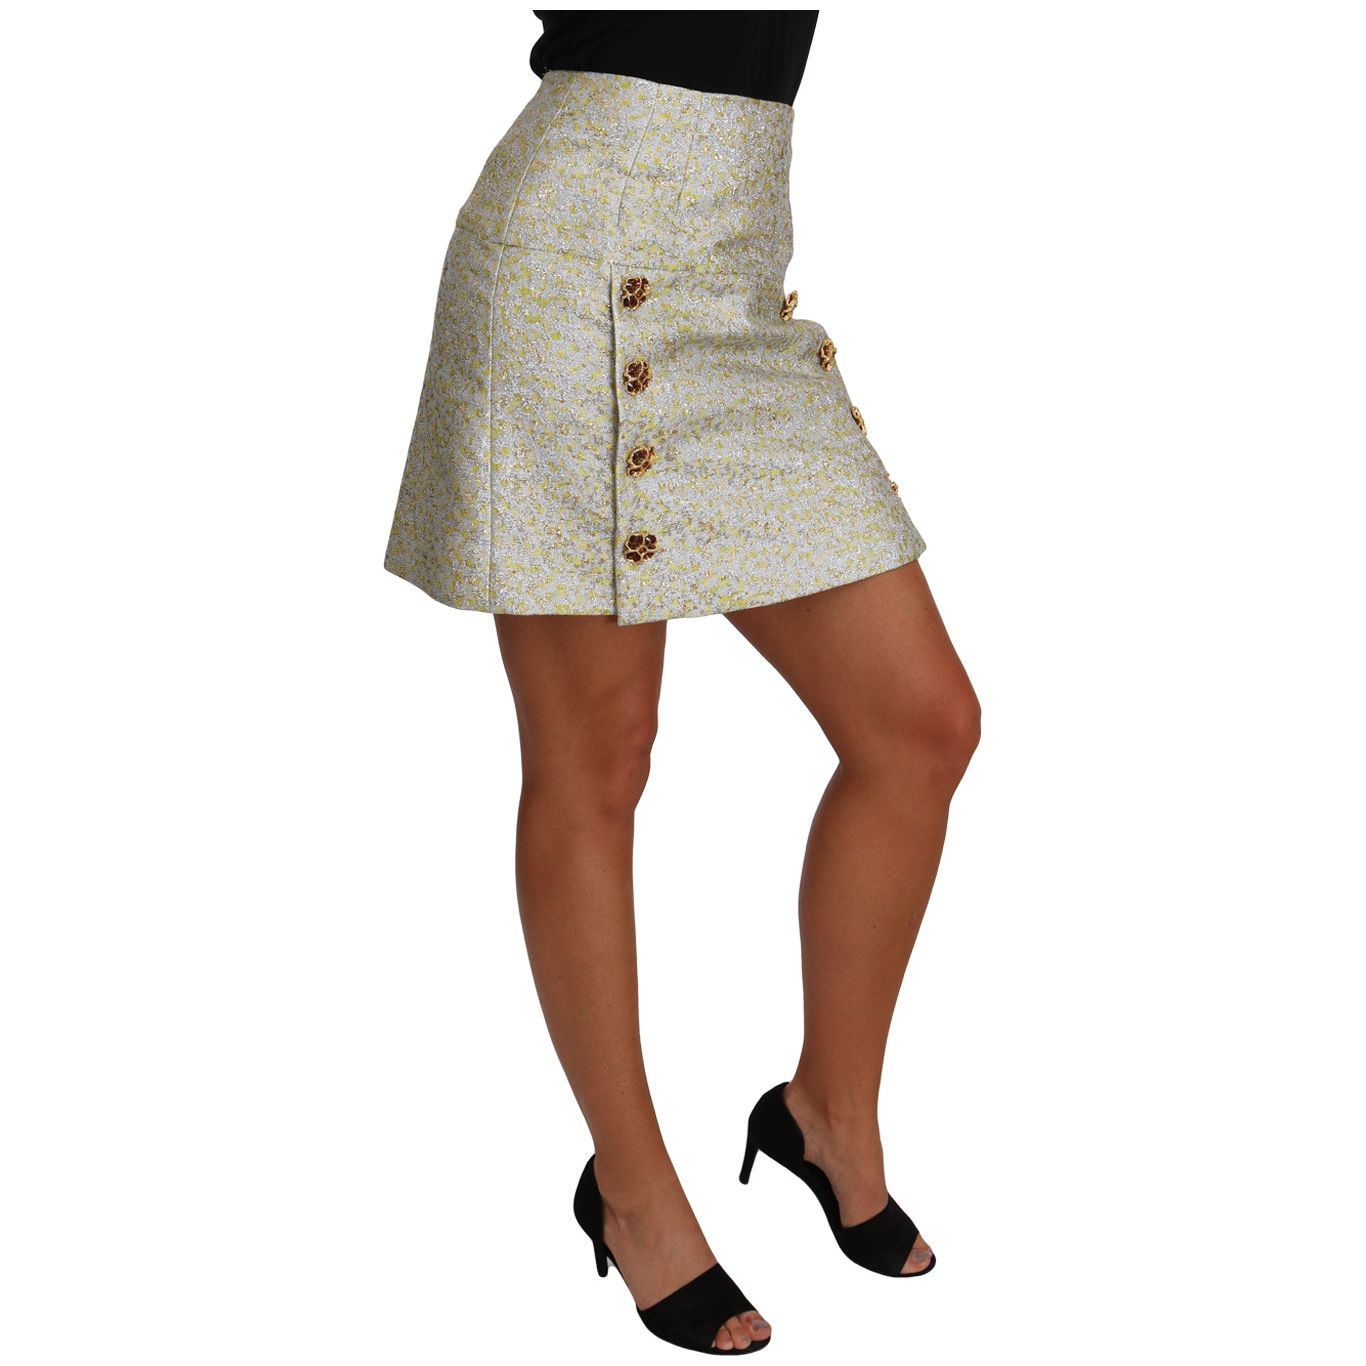 Dolce & Gabbana Crystal-Embellished Jacquard Mini Skirt gold-brocade-crystal-jaquard-mini-skirt 657078-gold-brocade-crystal-jaquard-mini-skirt-4.jpg